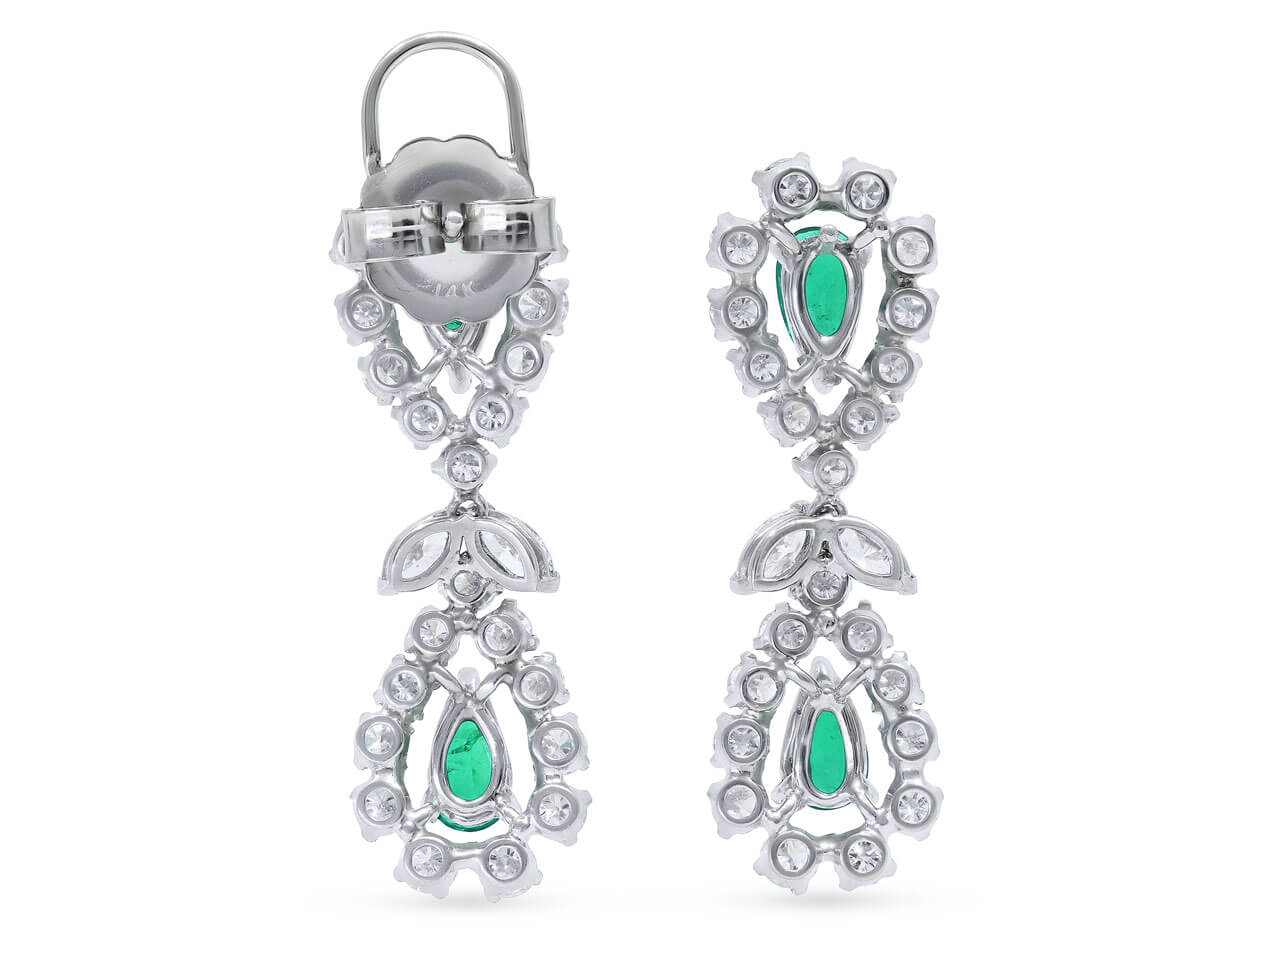 Beladora 'Bespoke' Emerald and Diamond Drop Earrings in Platinum